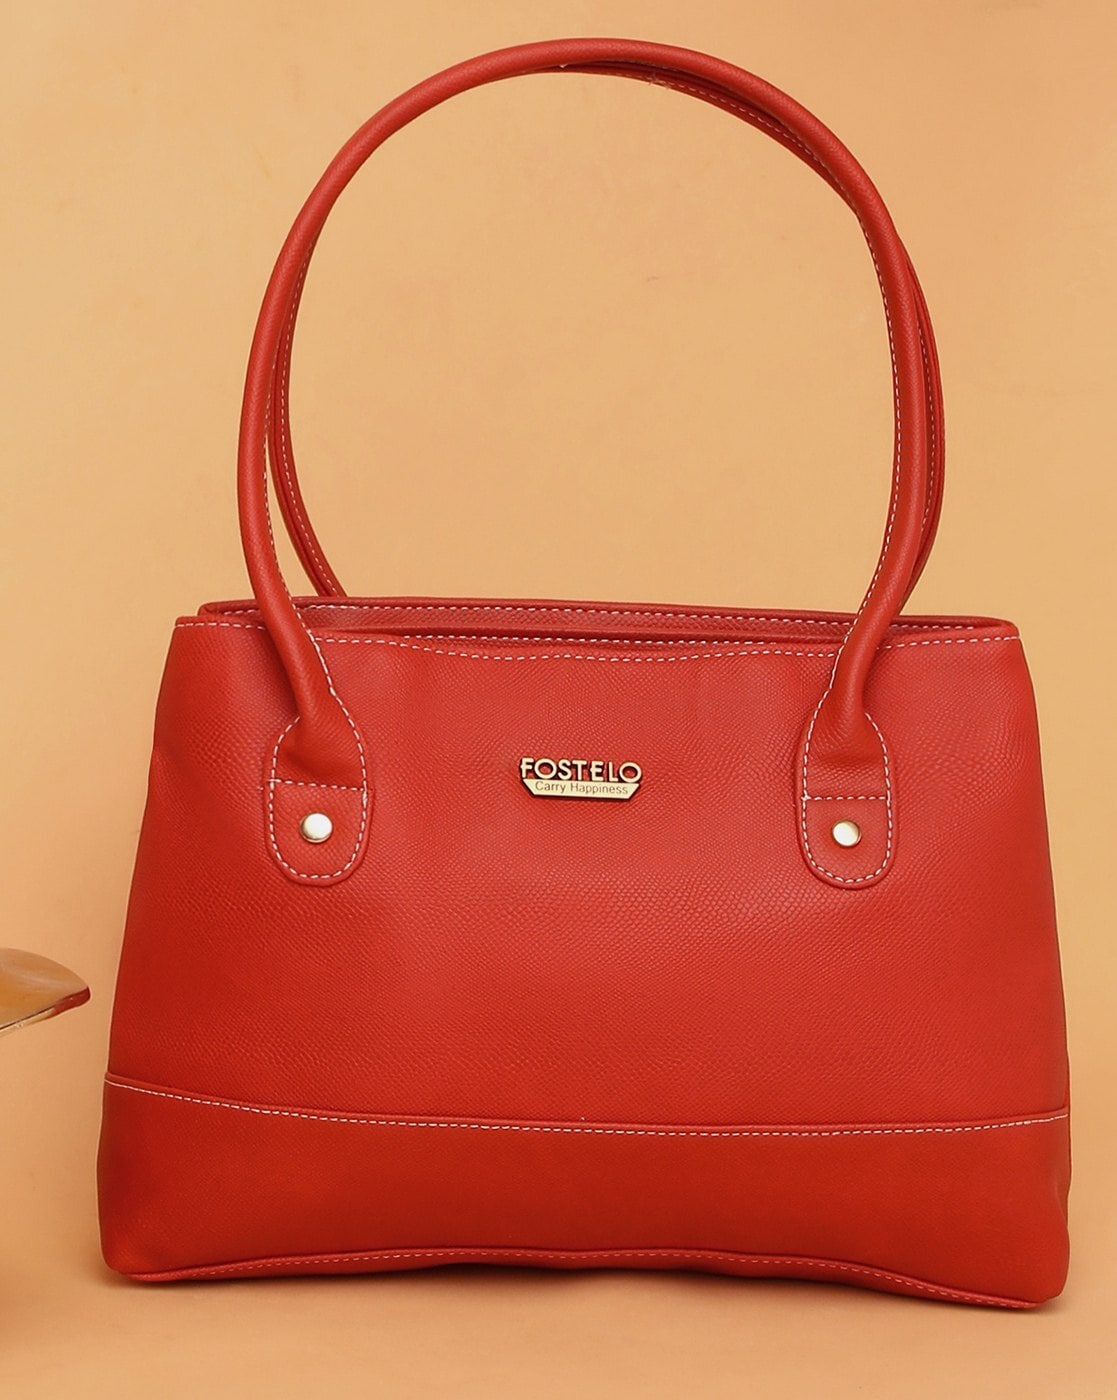 ZARA Convertible Shoulder Bags for Women | Mercari